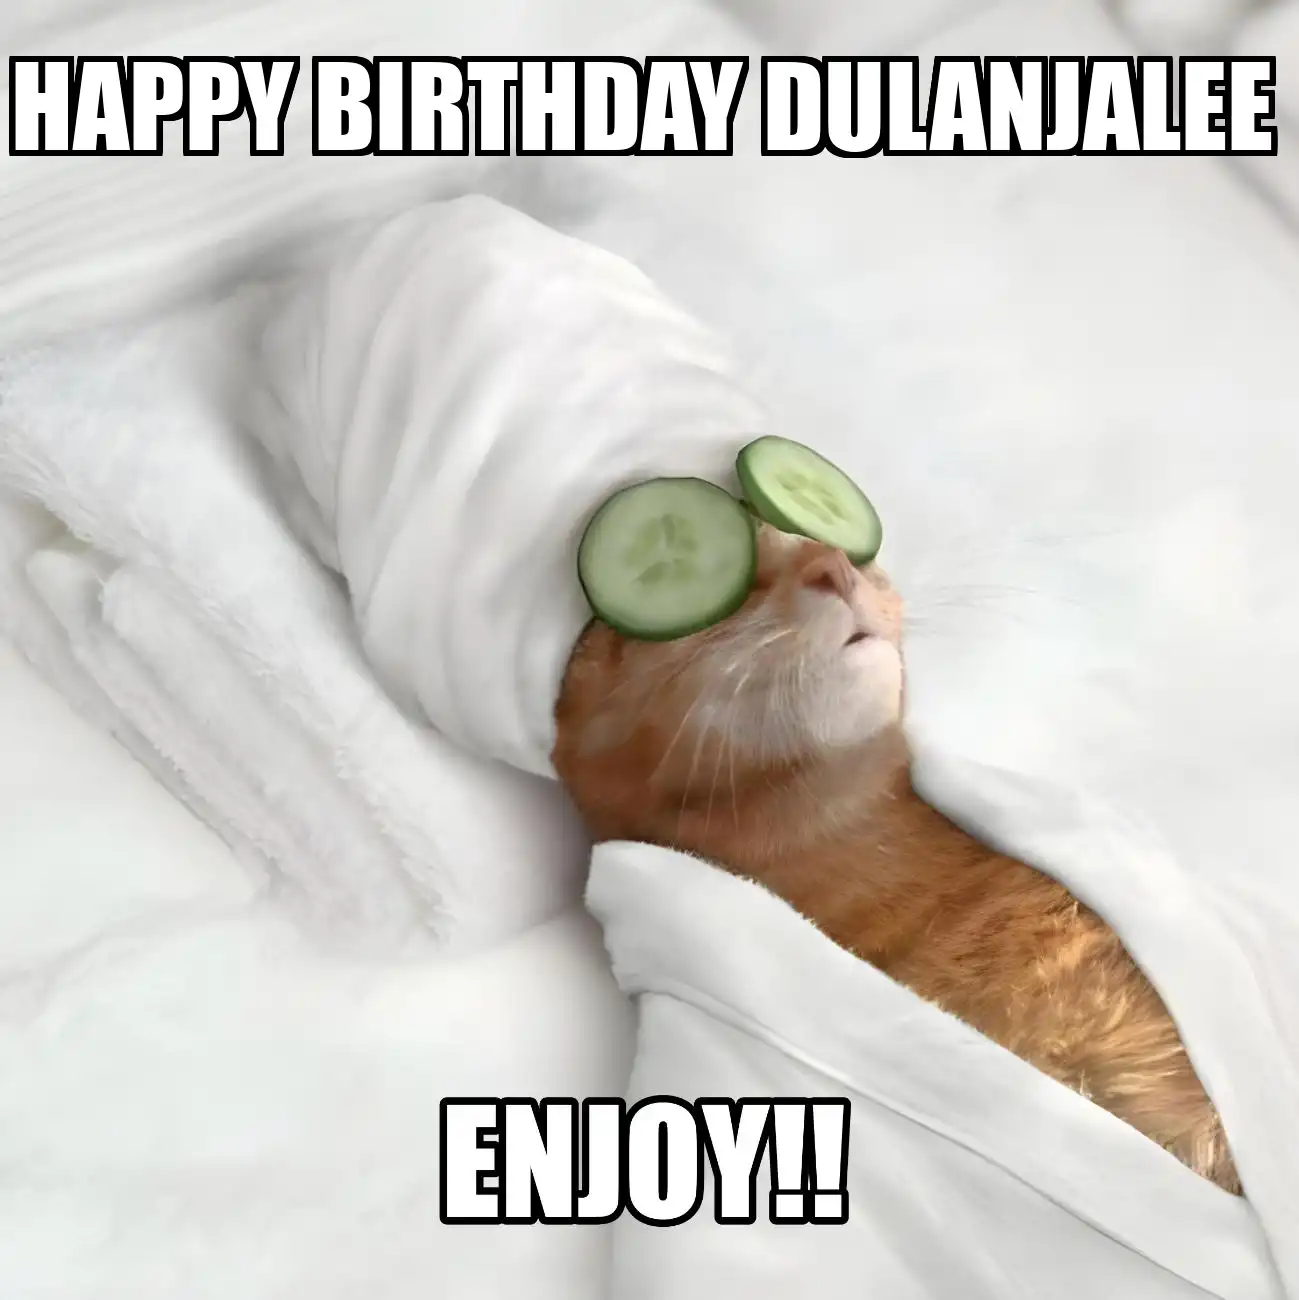 Happy Birthday Dulanjalee Enjoy Cat Meme